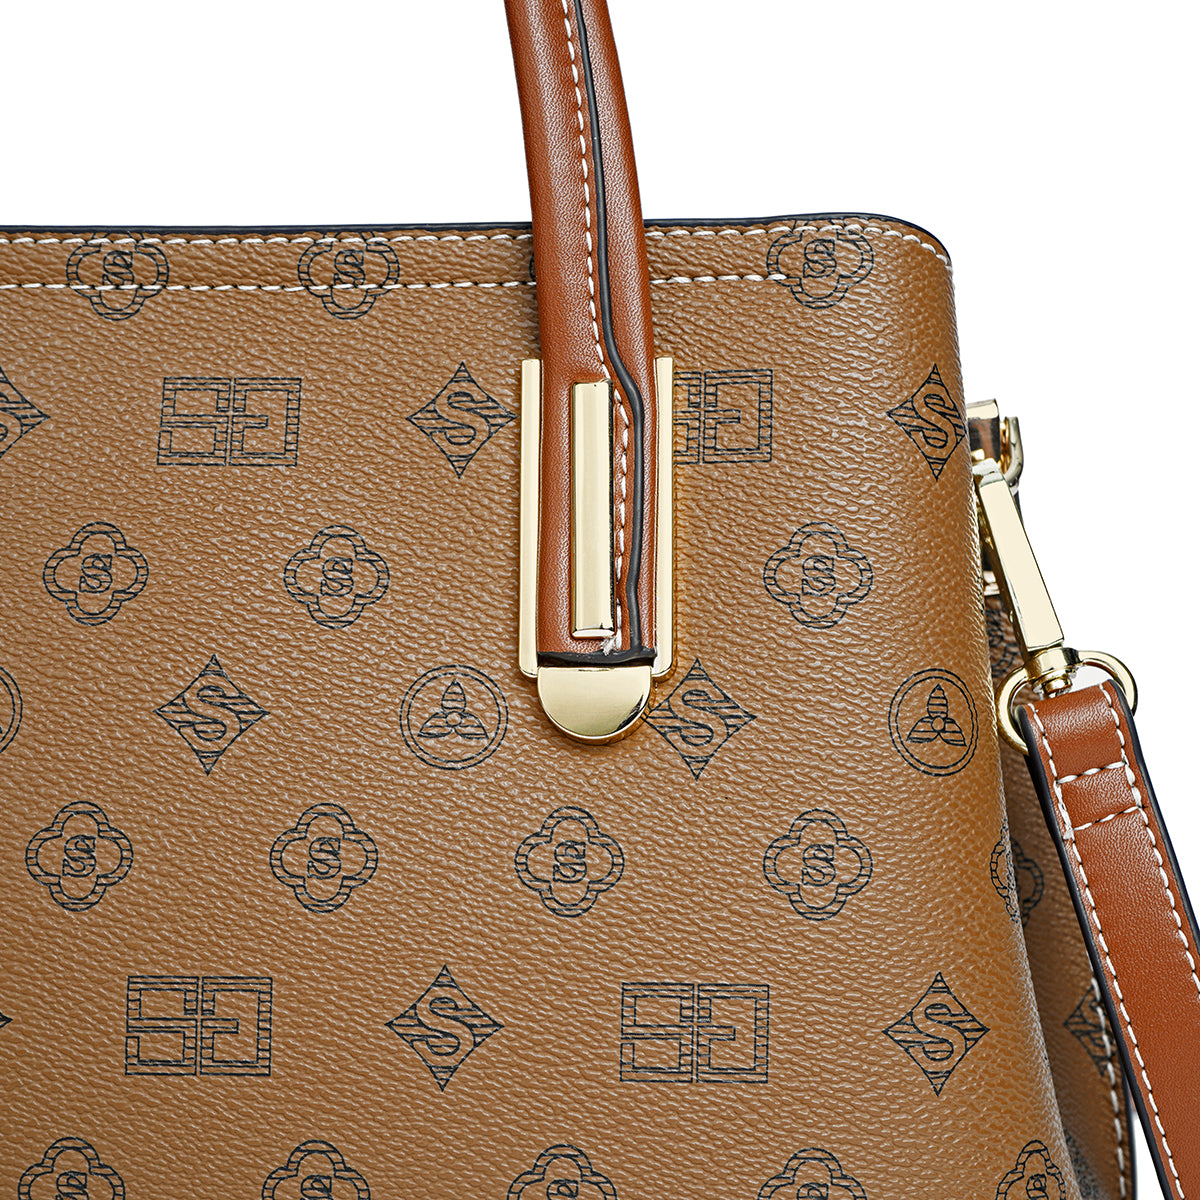 Luxurious handbag with shoulder strap, width 27 cm, brown or tan color